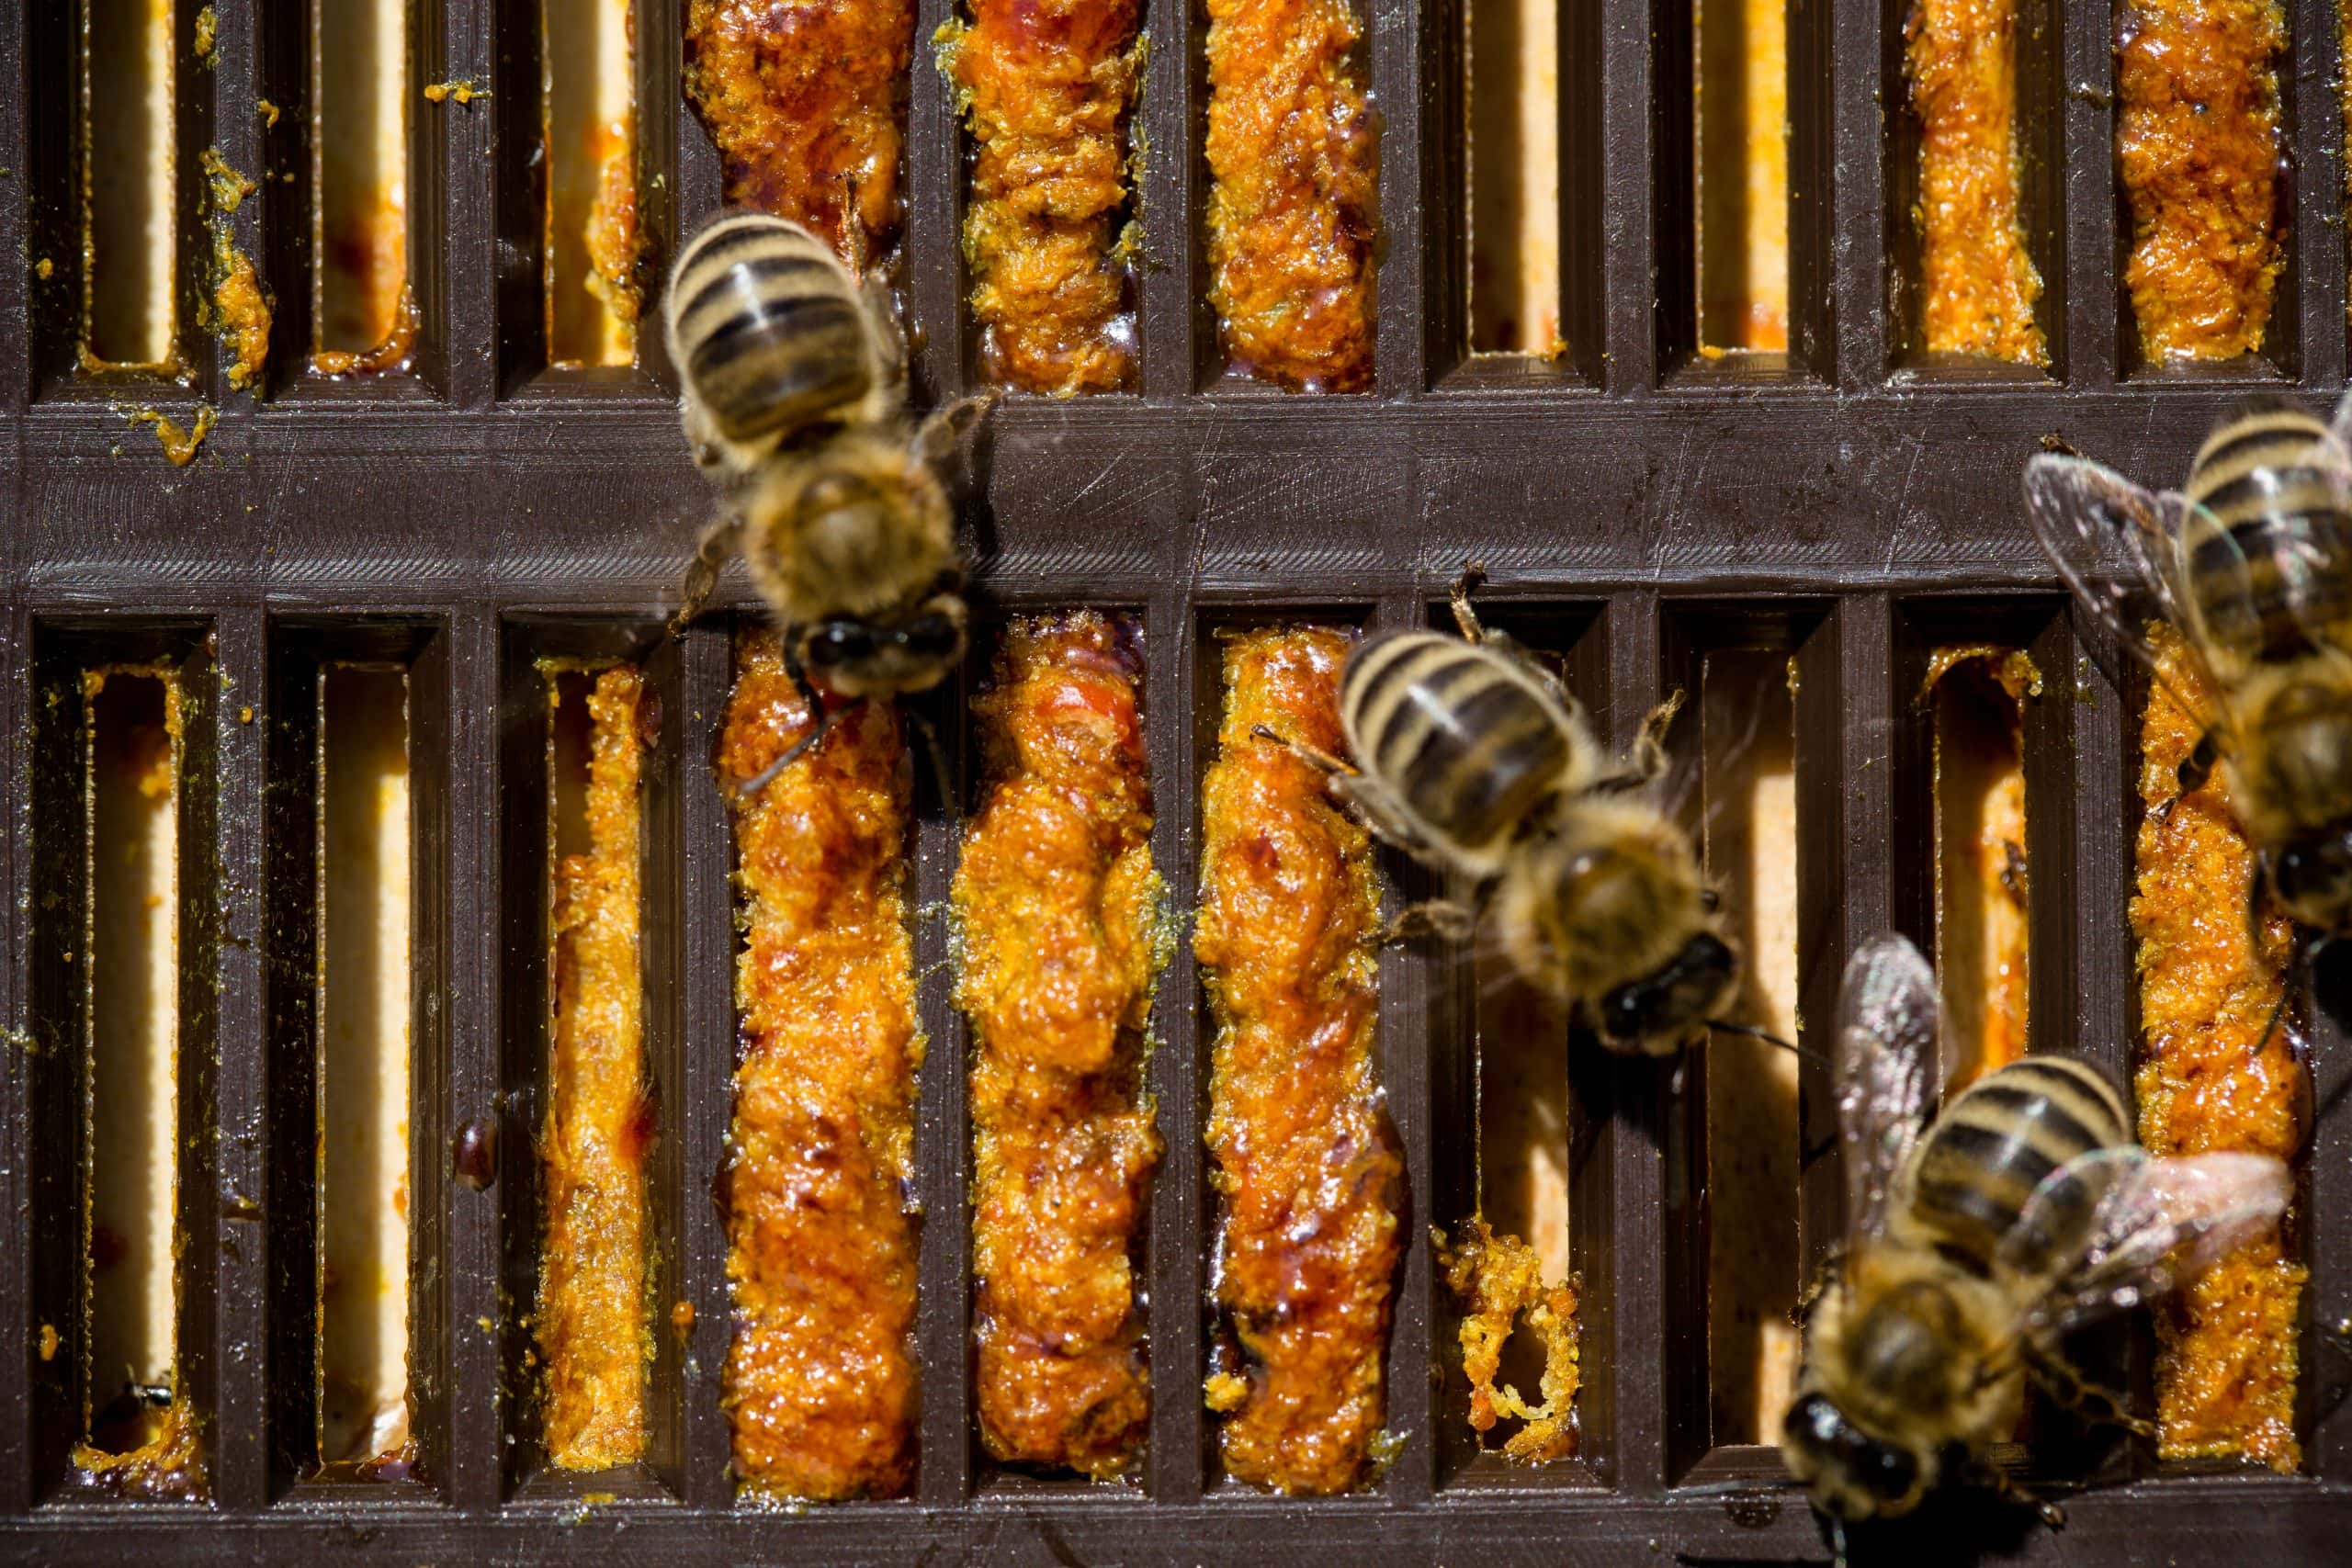 Honey Bee Propolis